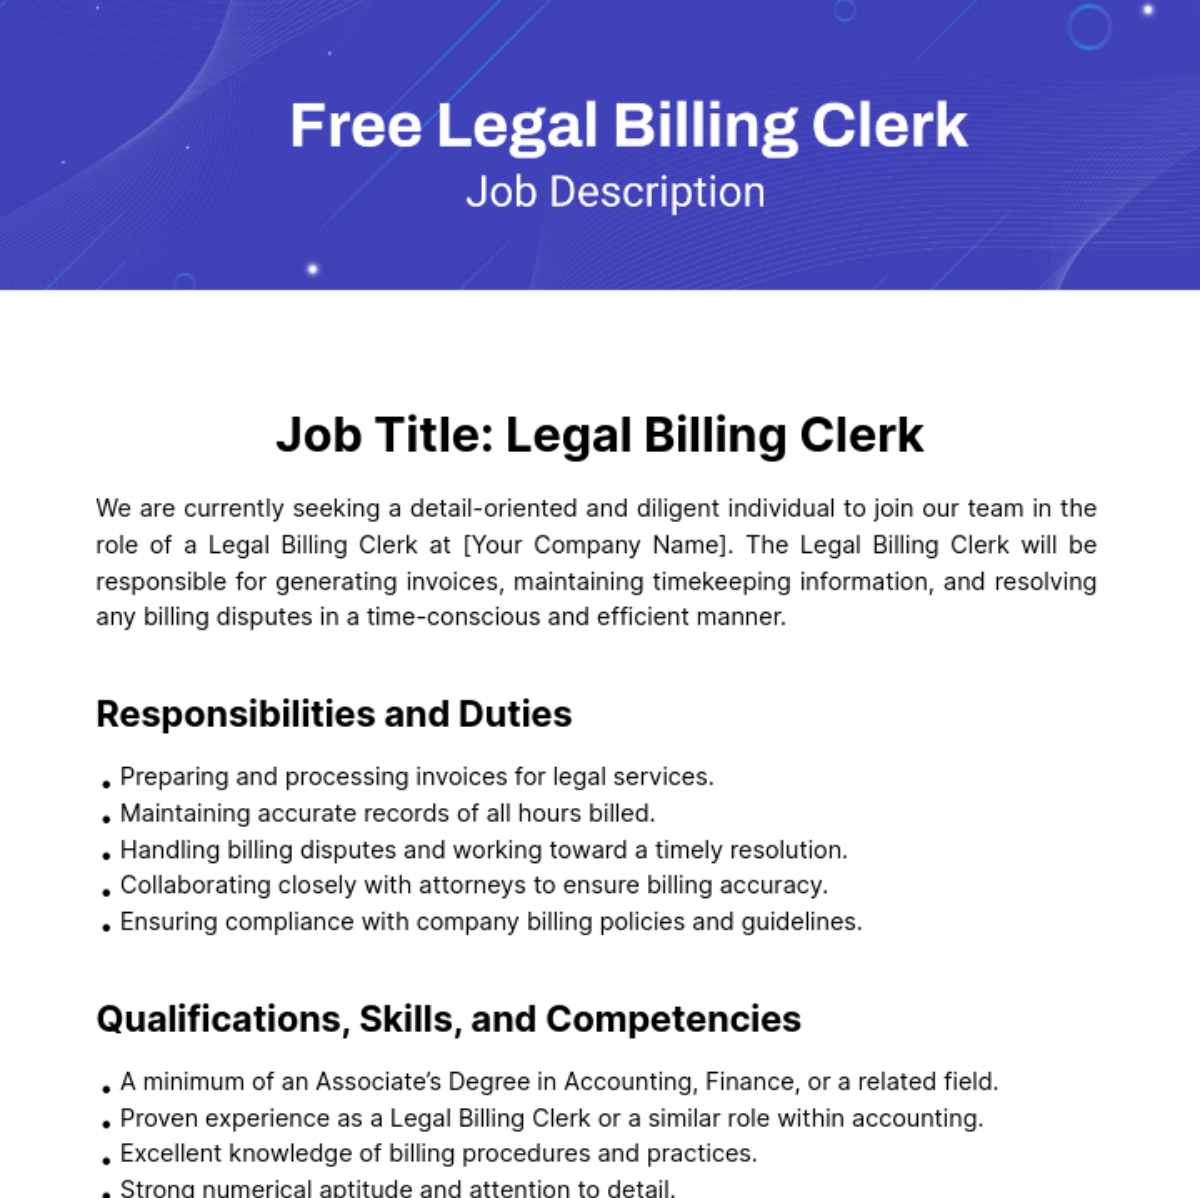 Free Legal Billing Clerk Job Description Template